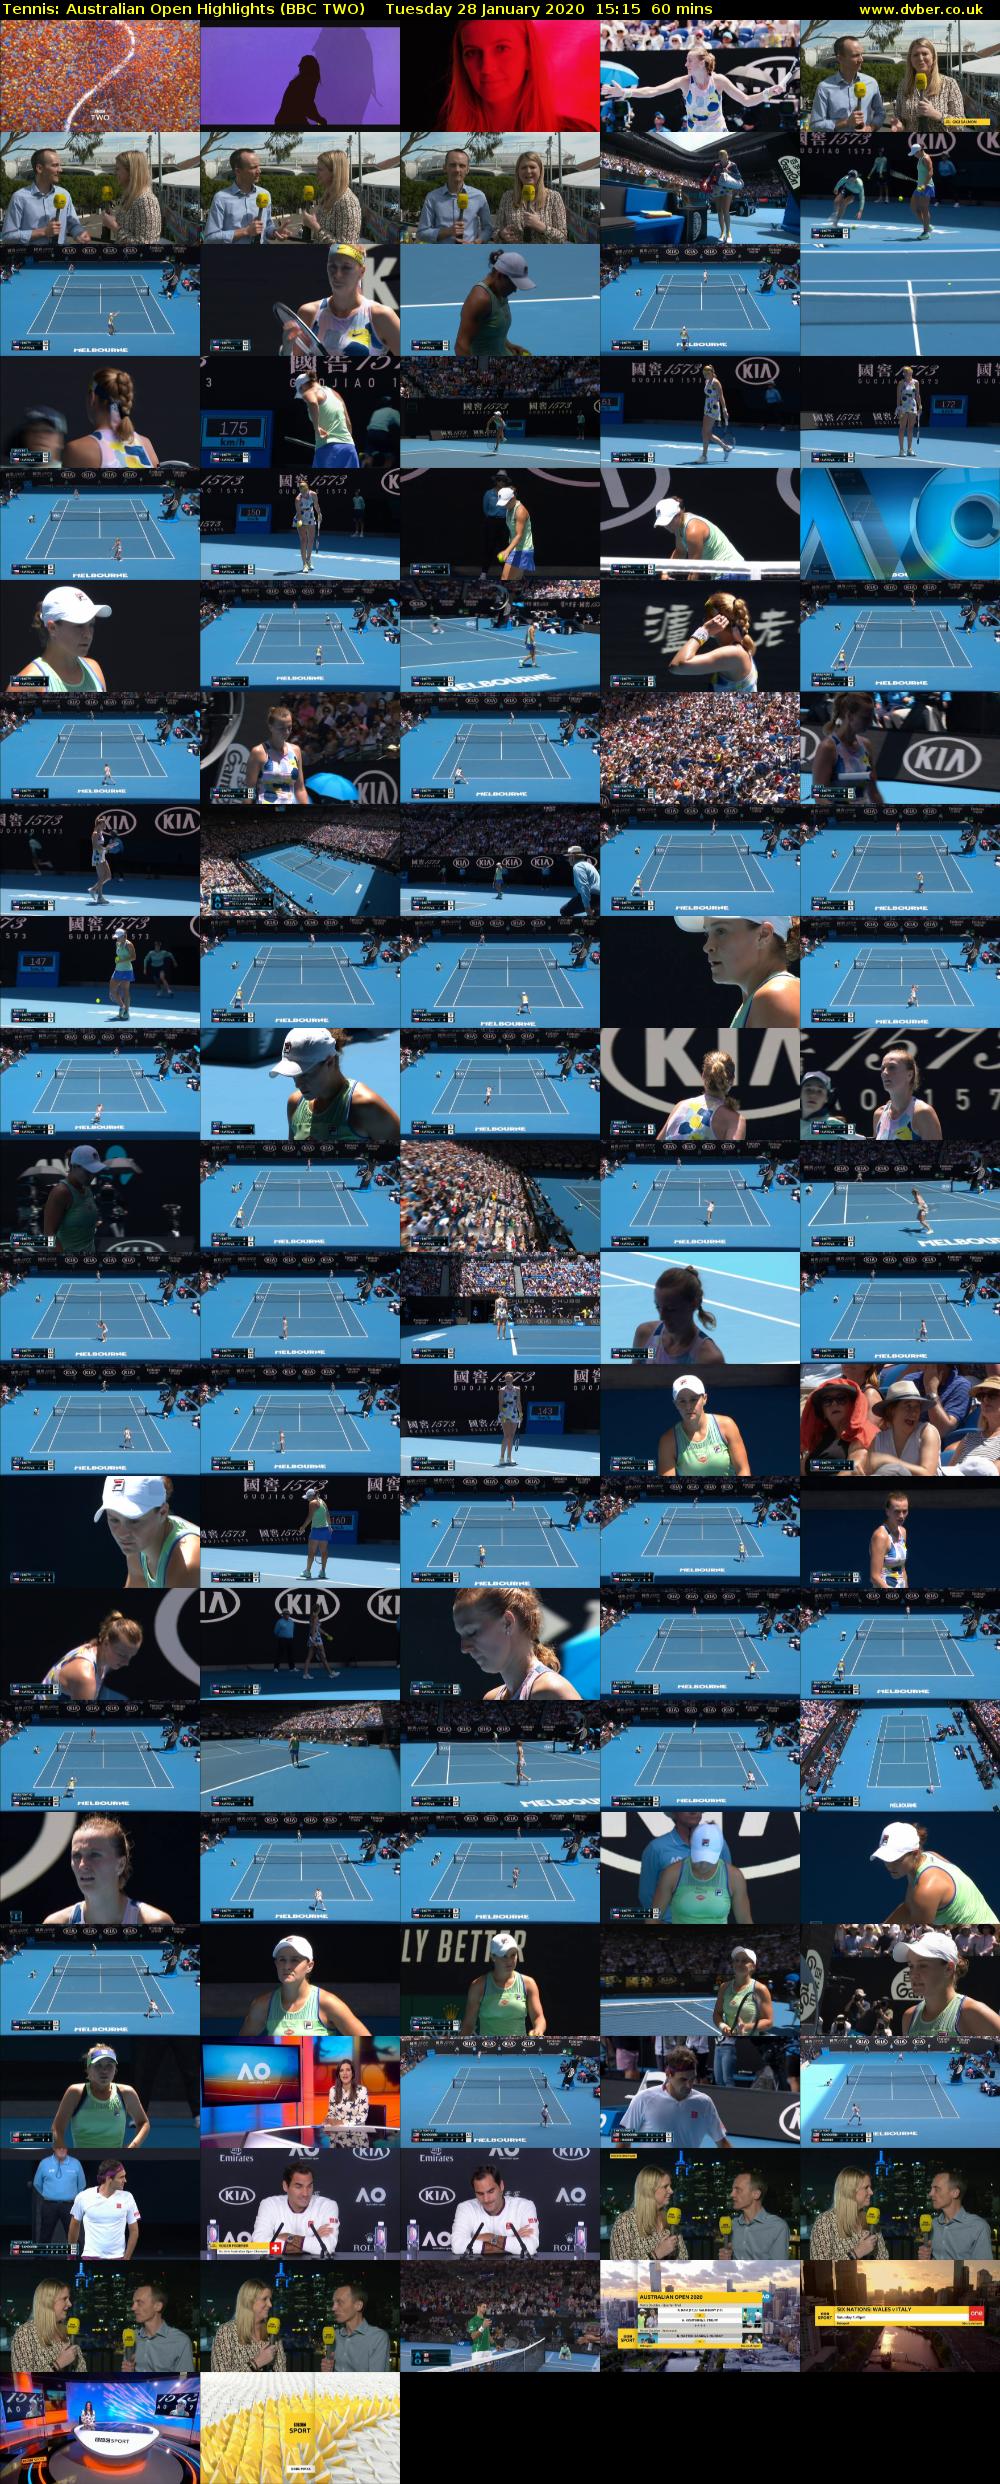 Tennis: Australian Open Highlights (BBC TWO) Tuesday 28 January 2020 15:15 - 16:15